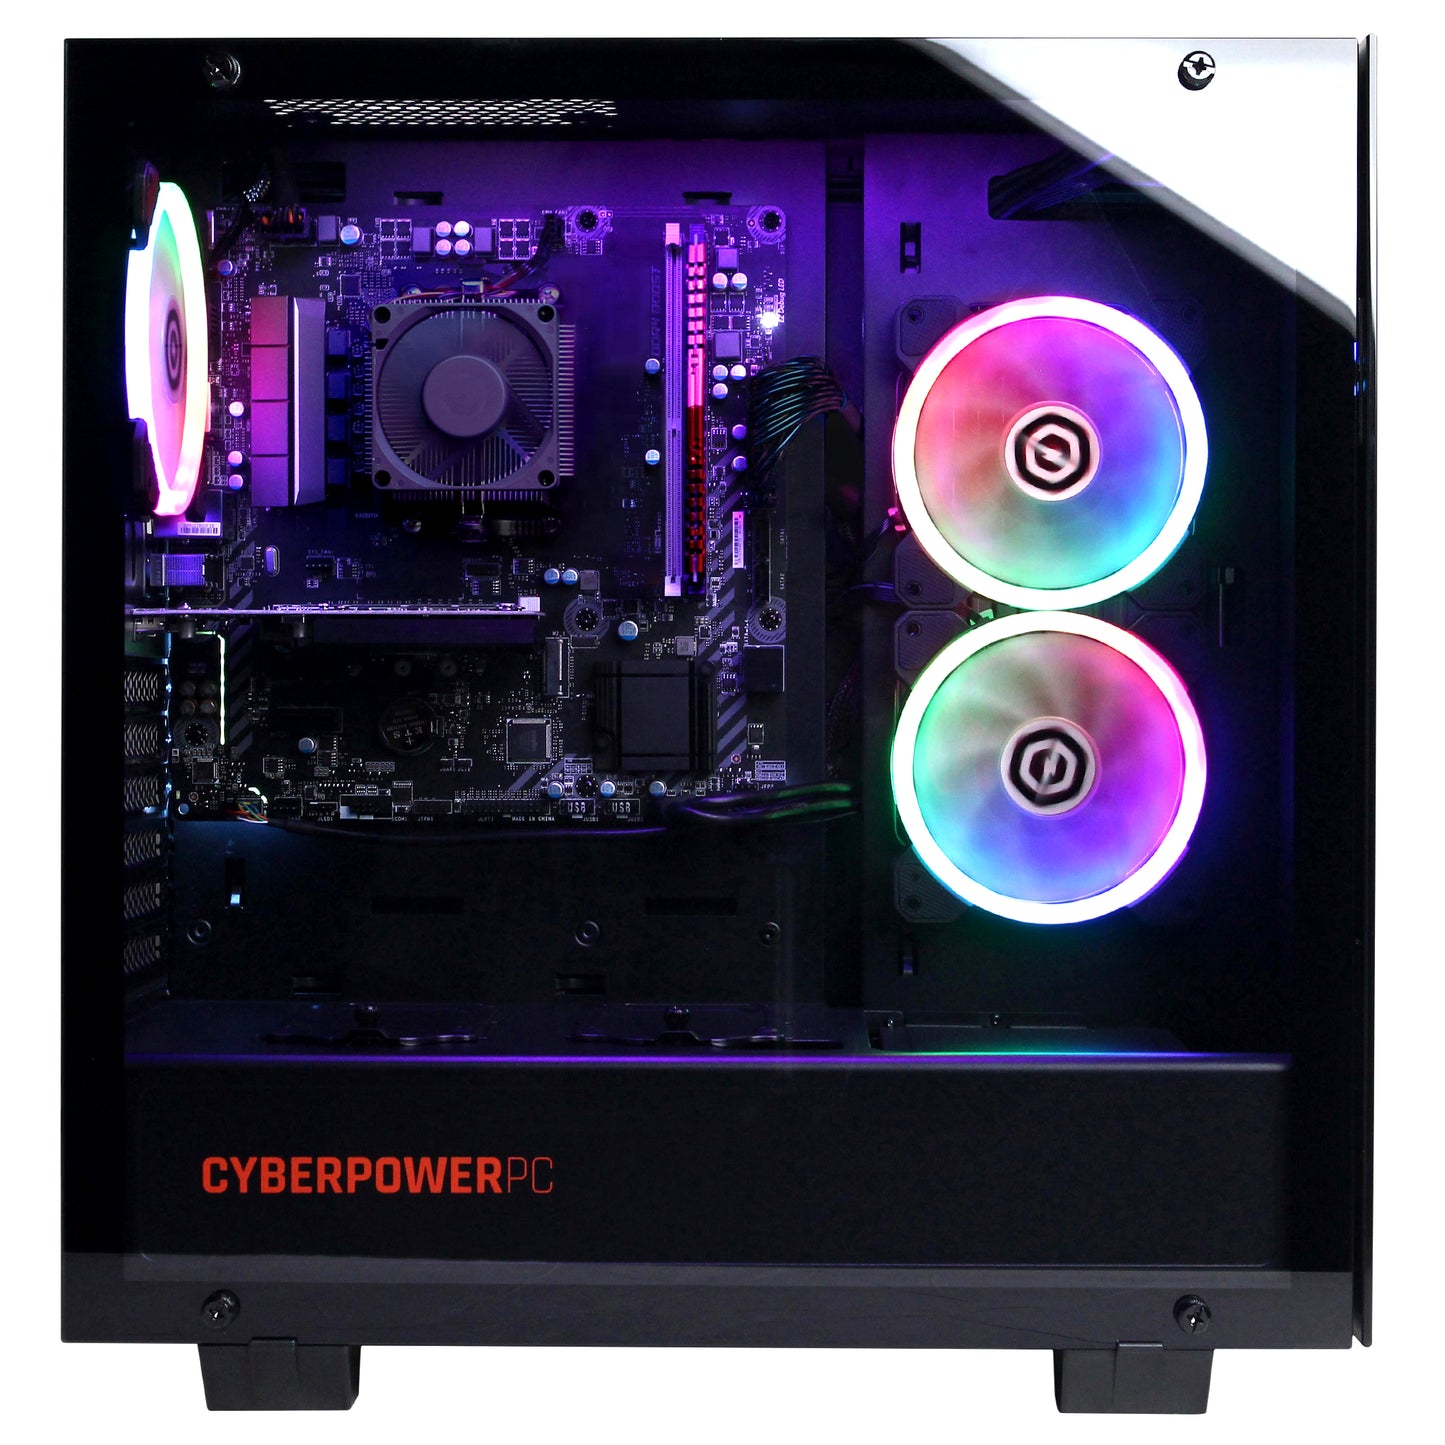 CyberPowerPC AMD Ryzen 8GB 120GB+1TB SSHD Gaming PC - GMA600 Used